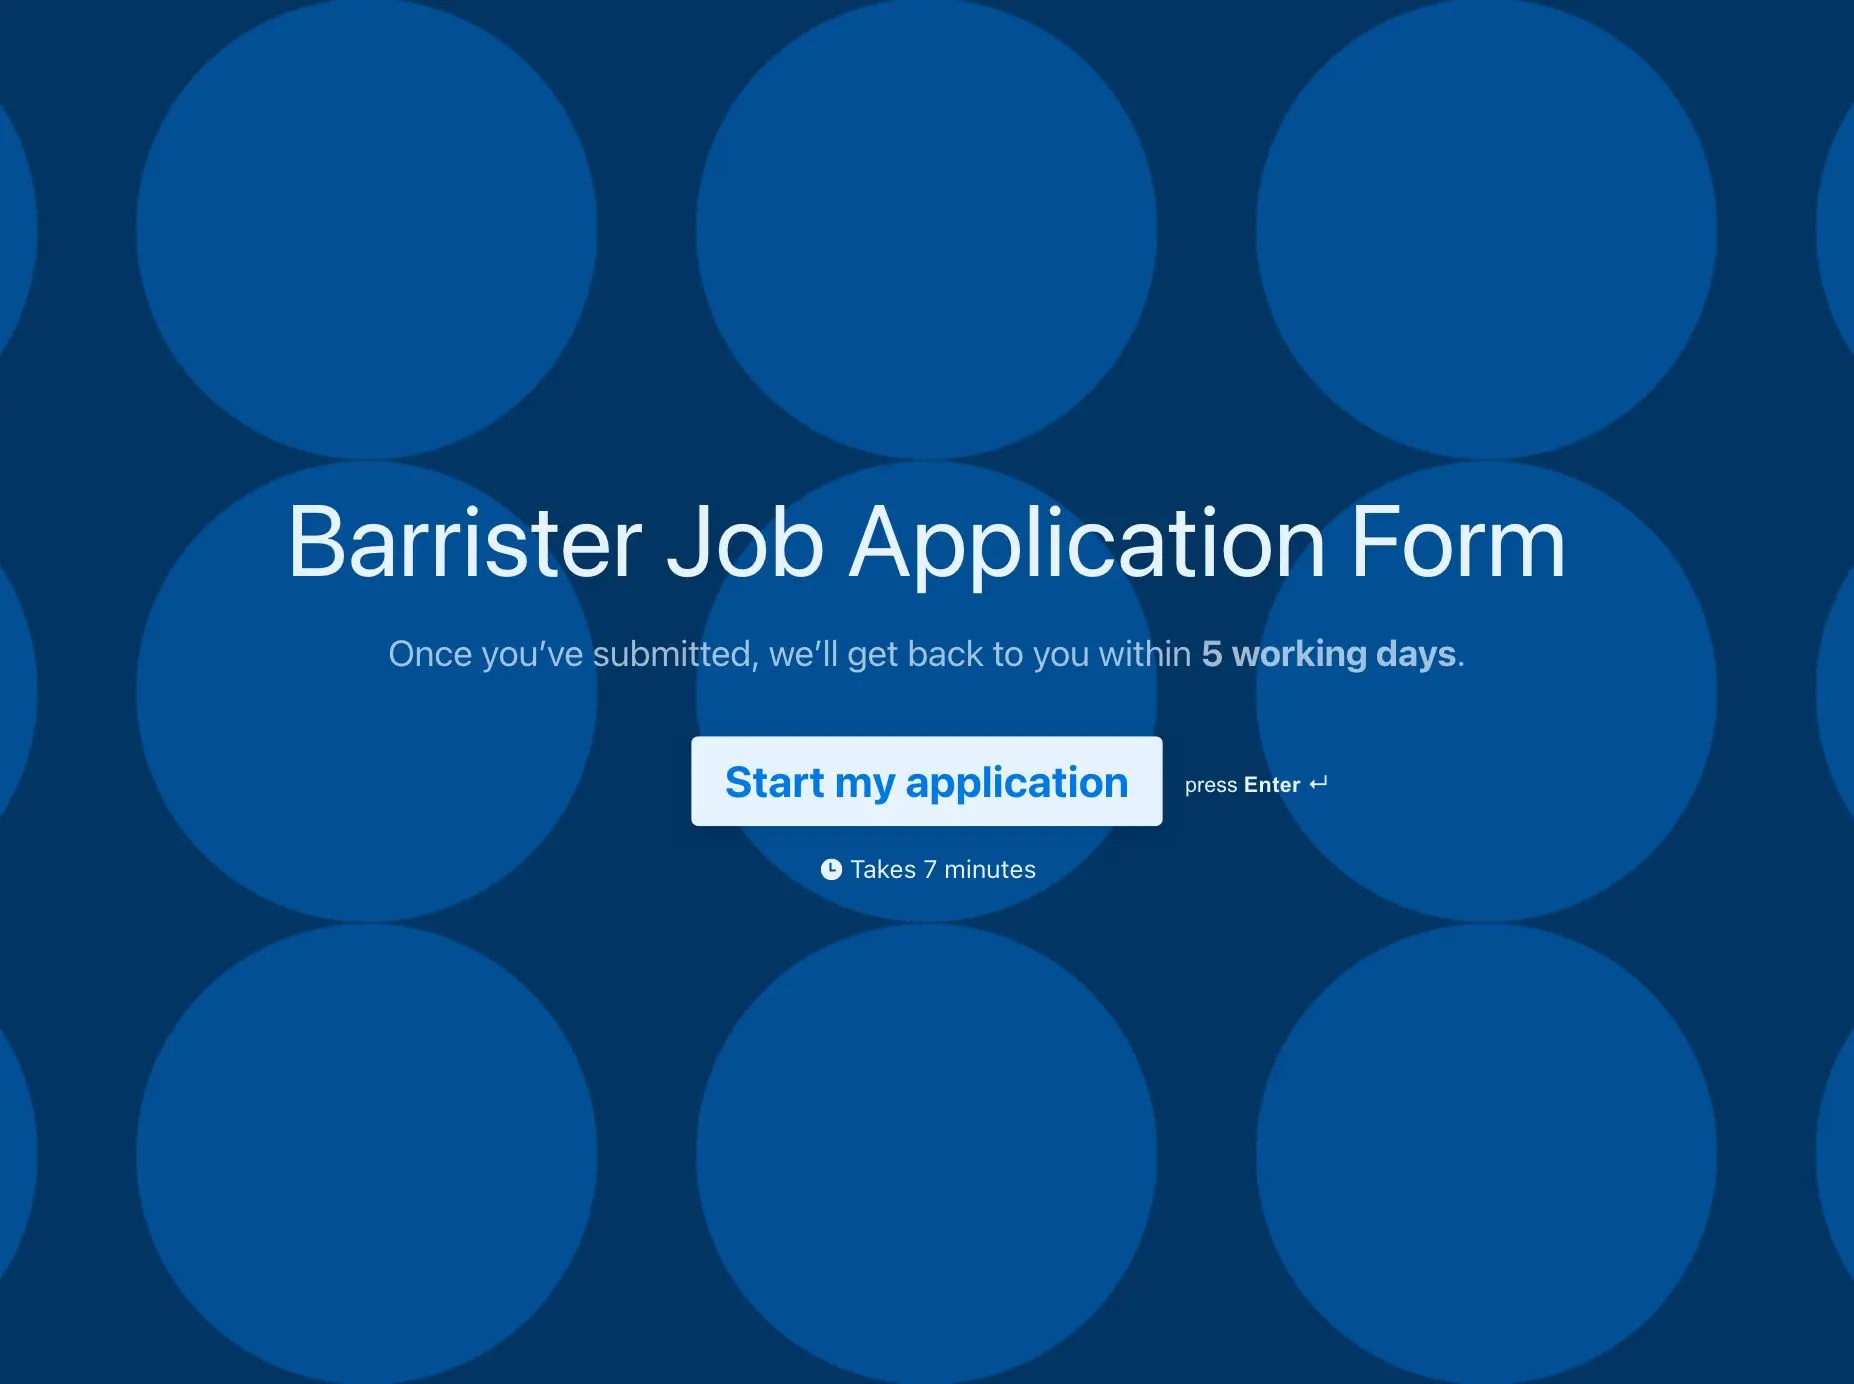 Barrister Job Application Form Template Hero